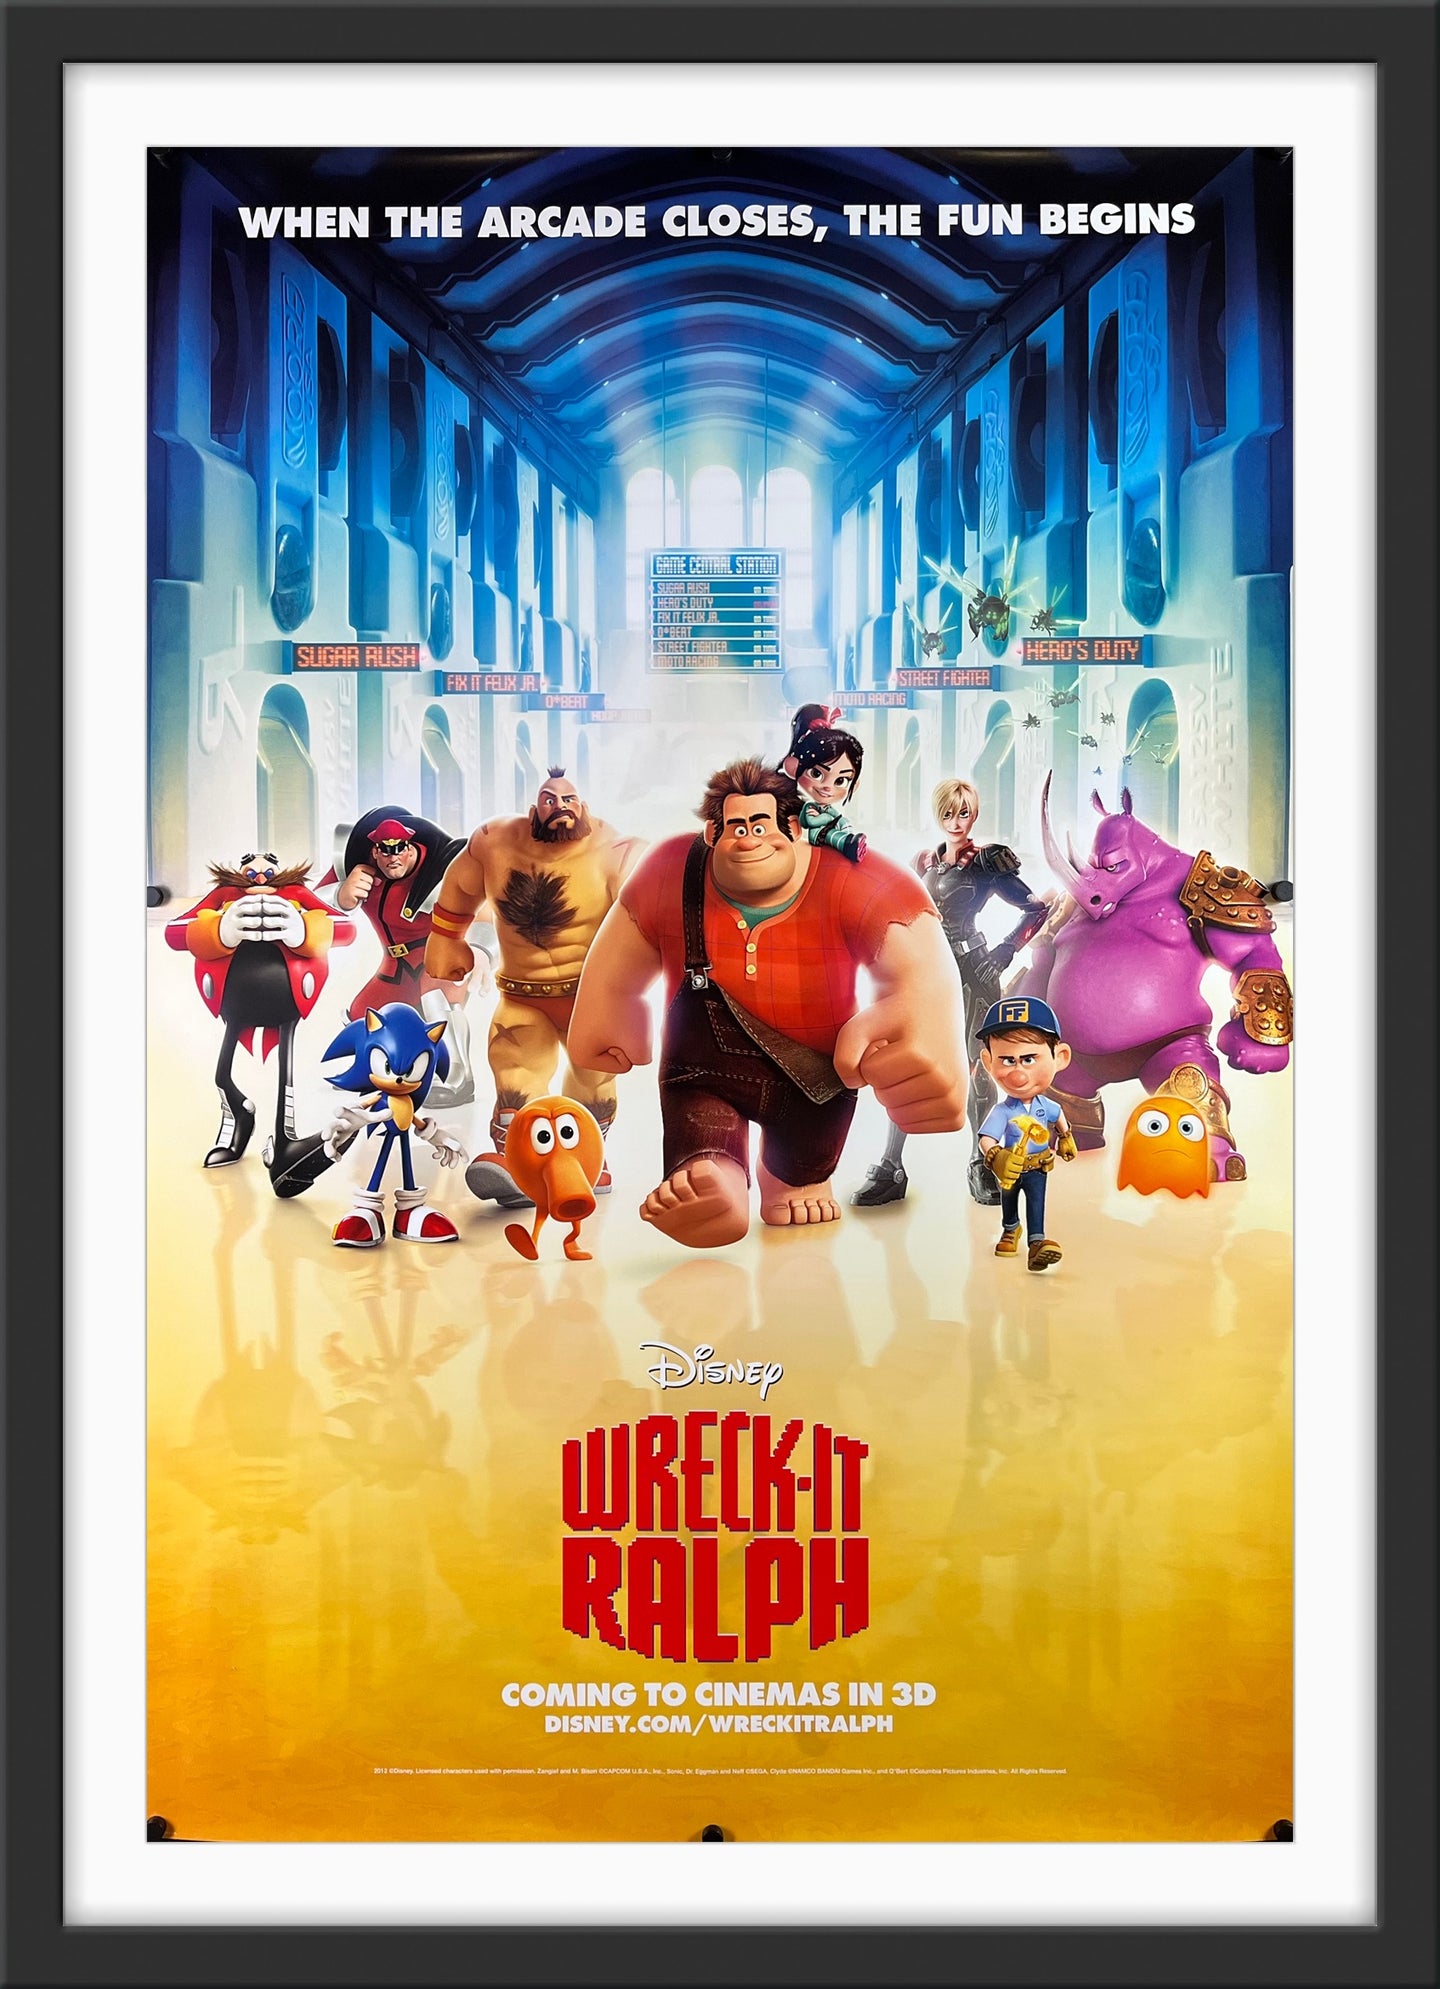 An original movie poster for the Disney film Wreck It Ralph